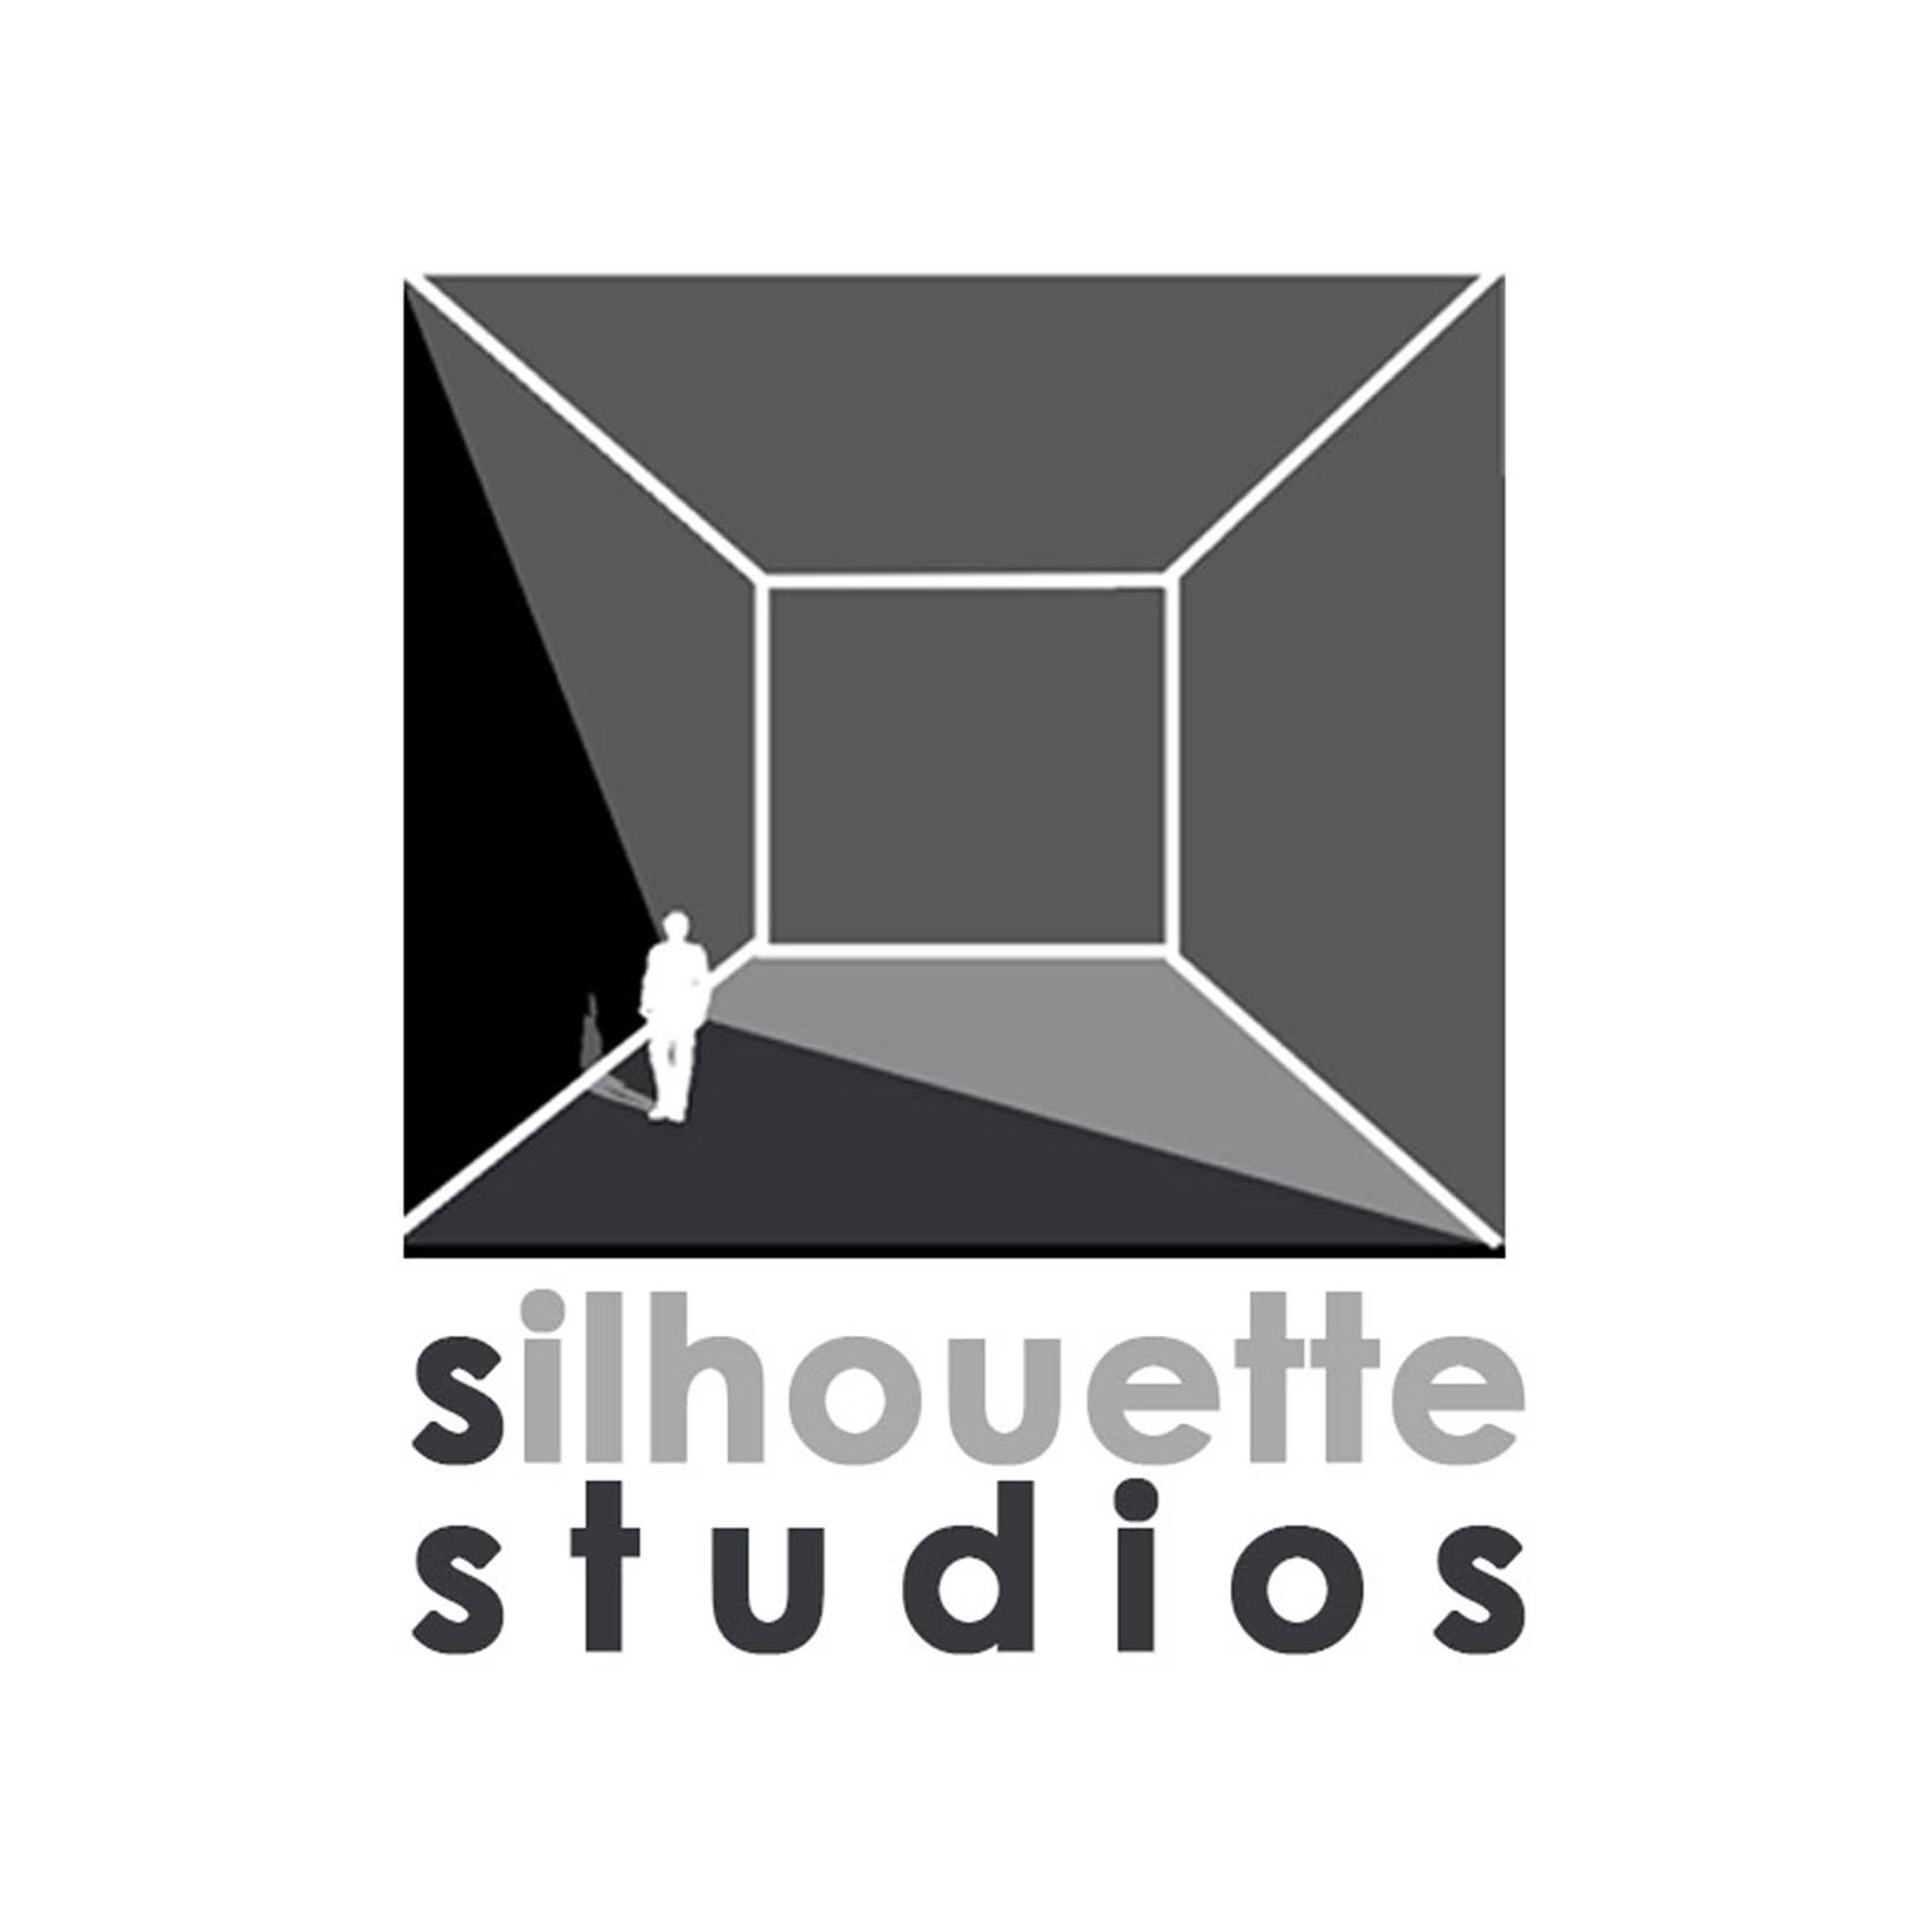 Silhouette Studios|Legal Services|Professional Services